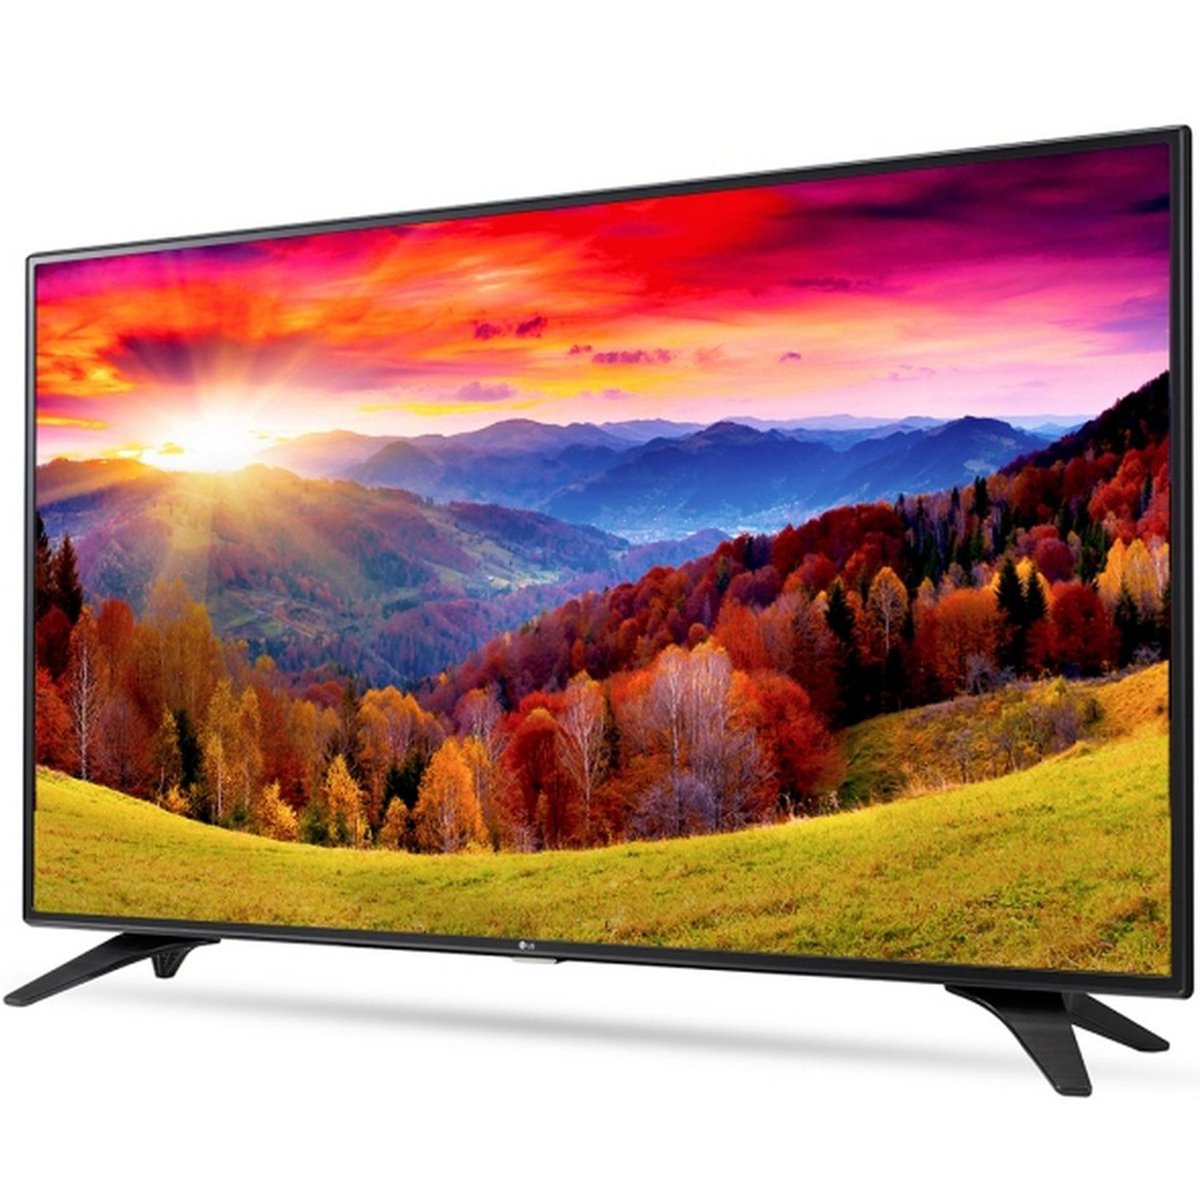 LG Full HD Smart LED TV 49LH600V 49inch